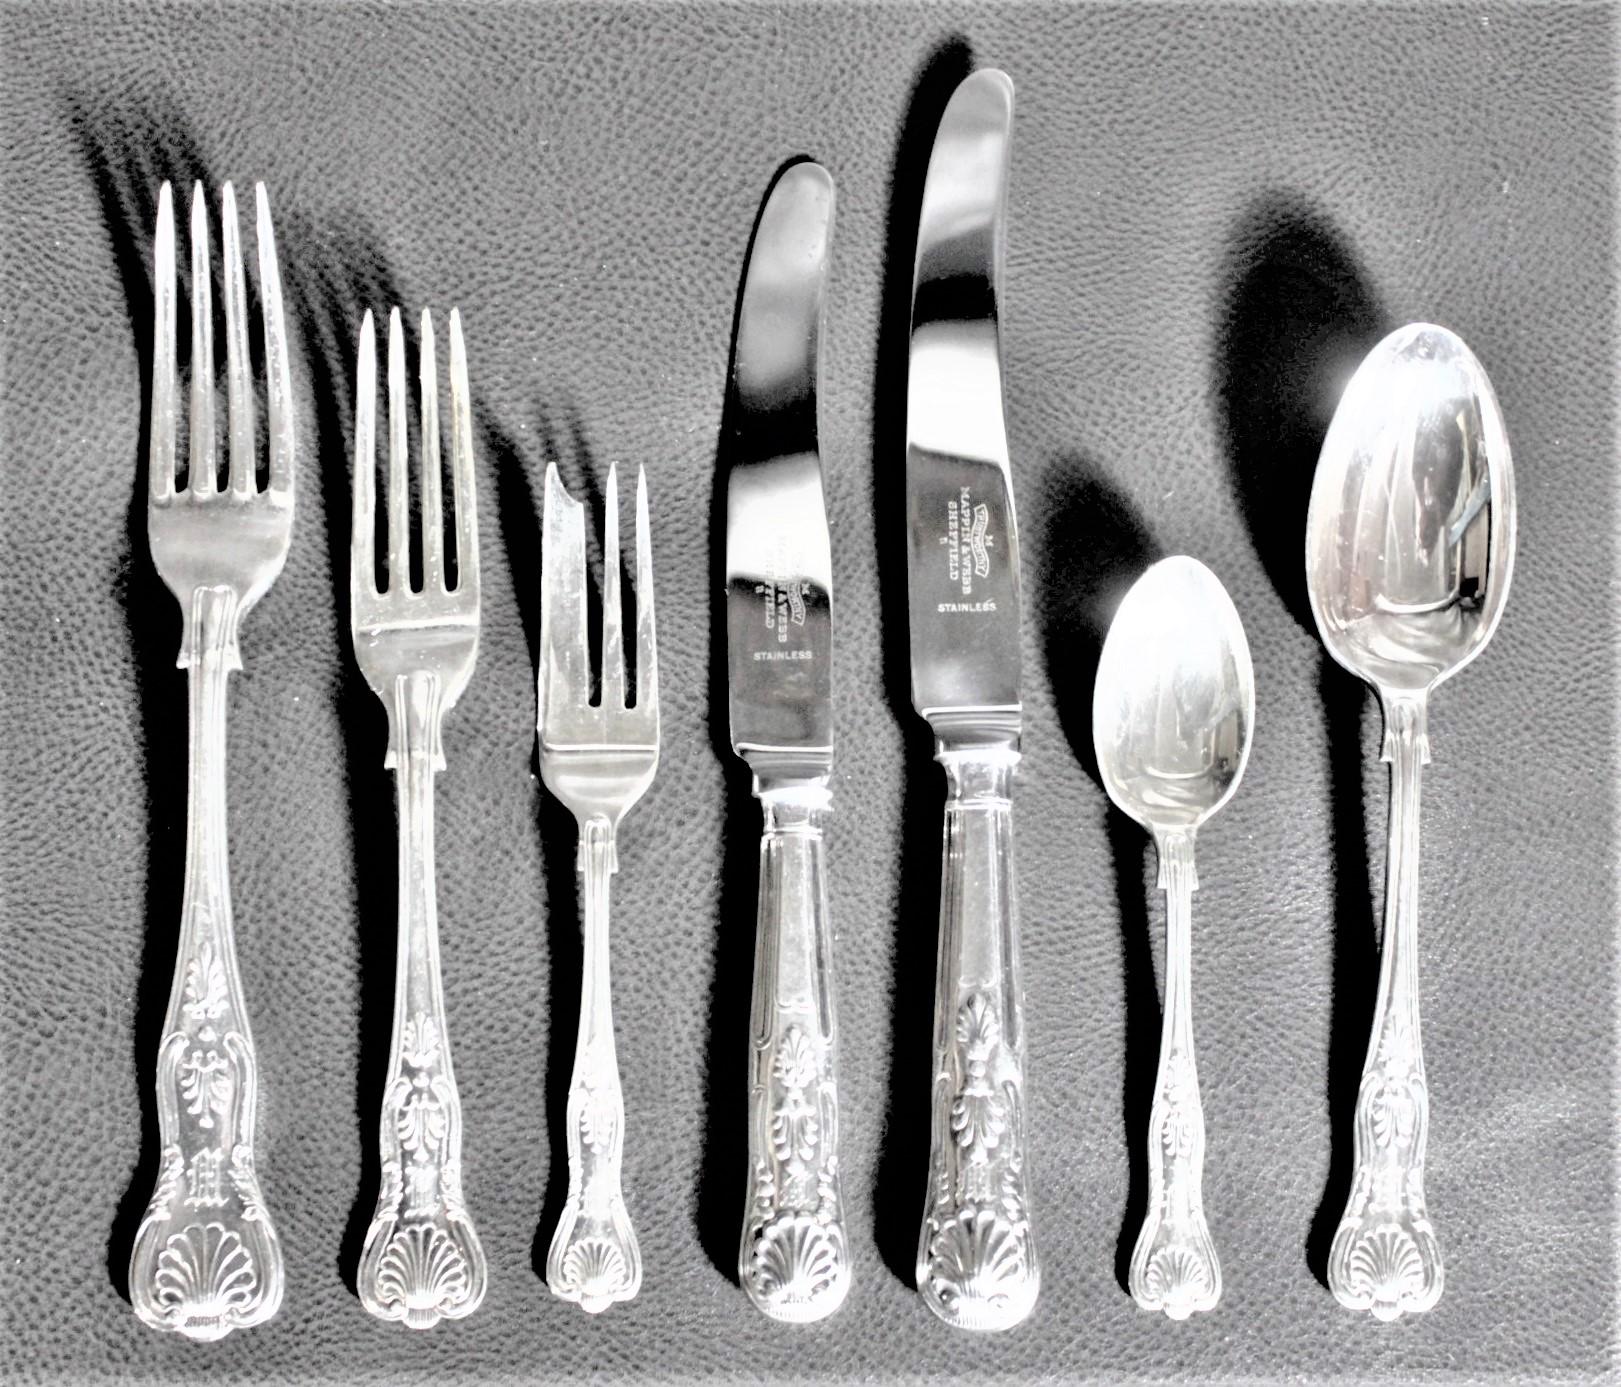 toronto silver plate company patterns